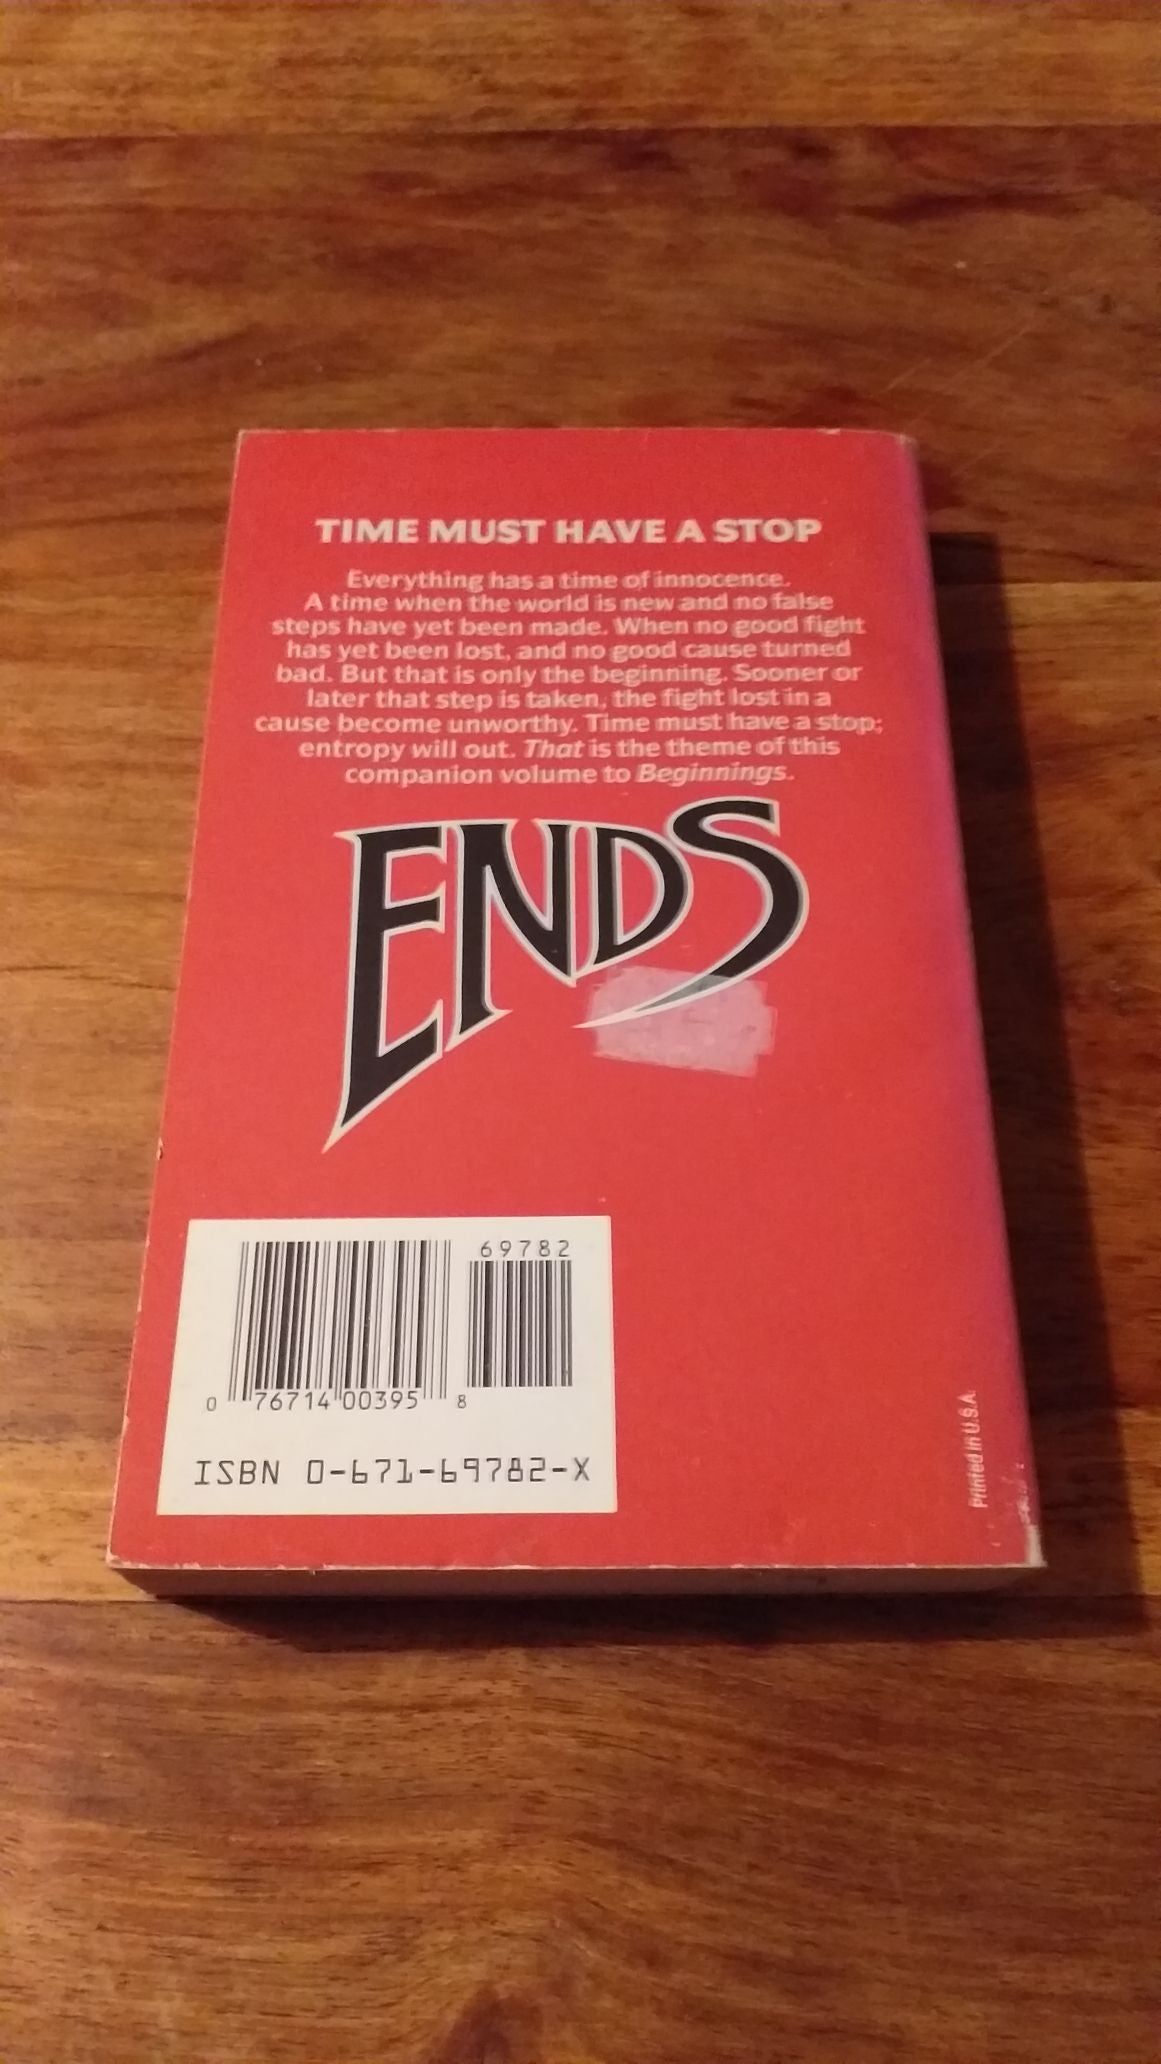 Ends by Gordon R. Dickson 1988